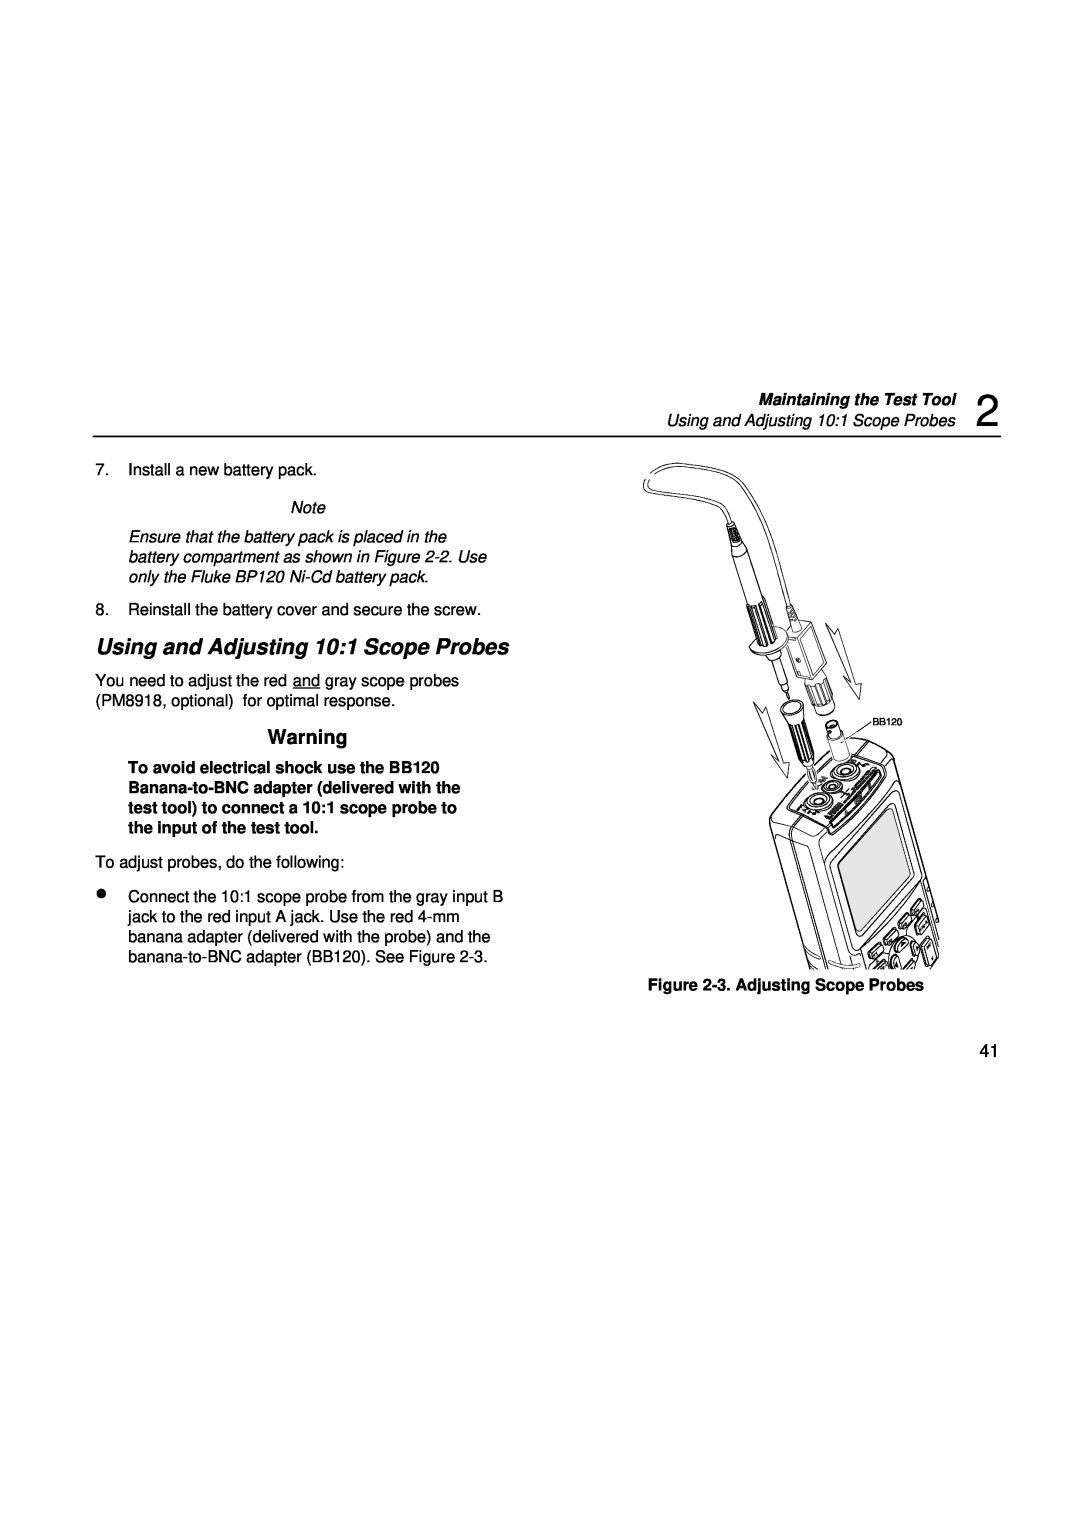 Fluke fluke123 user manual Using and Adjusting 101 Scope Probes, 3. Adjusting Scope Probes, Maintaining the Test Tool 